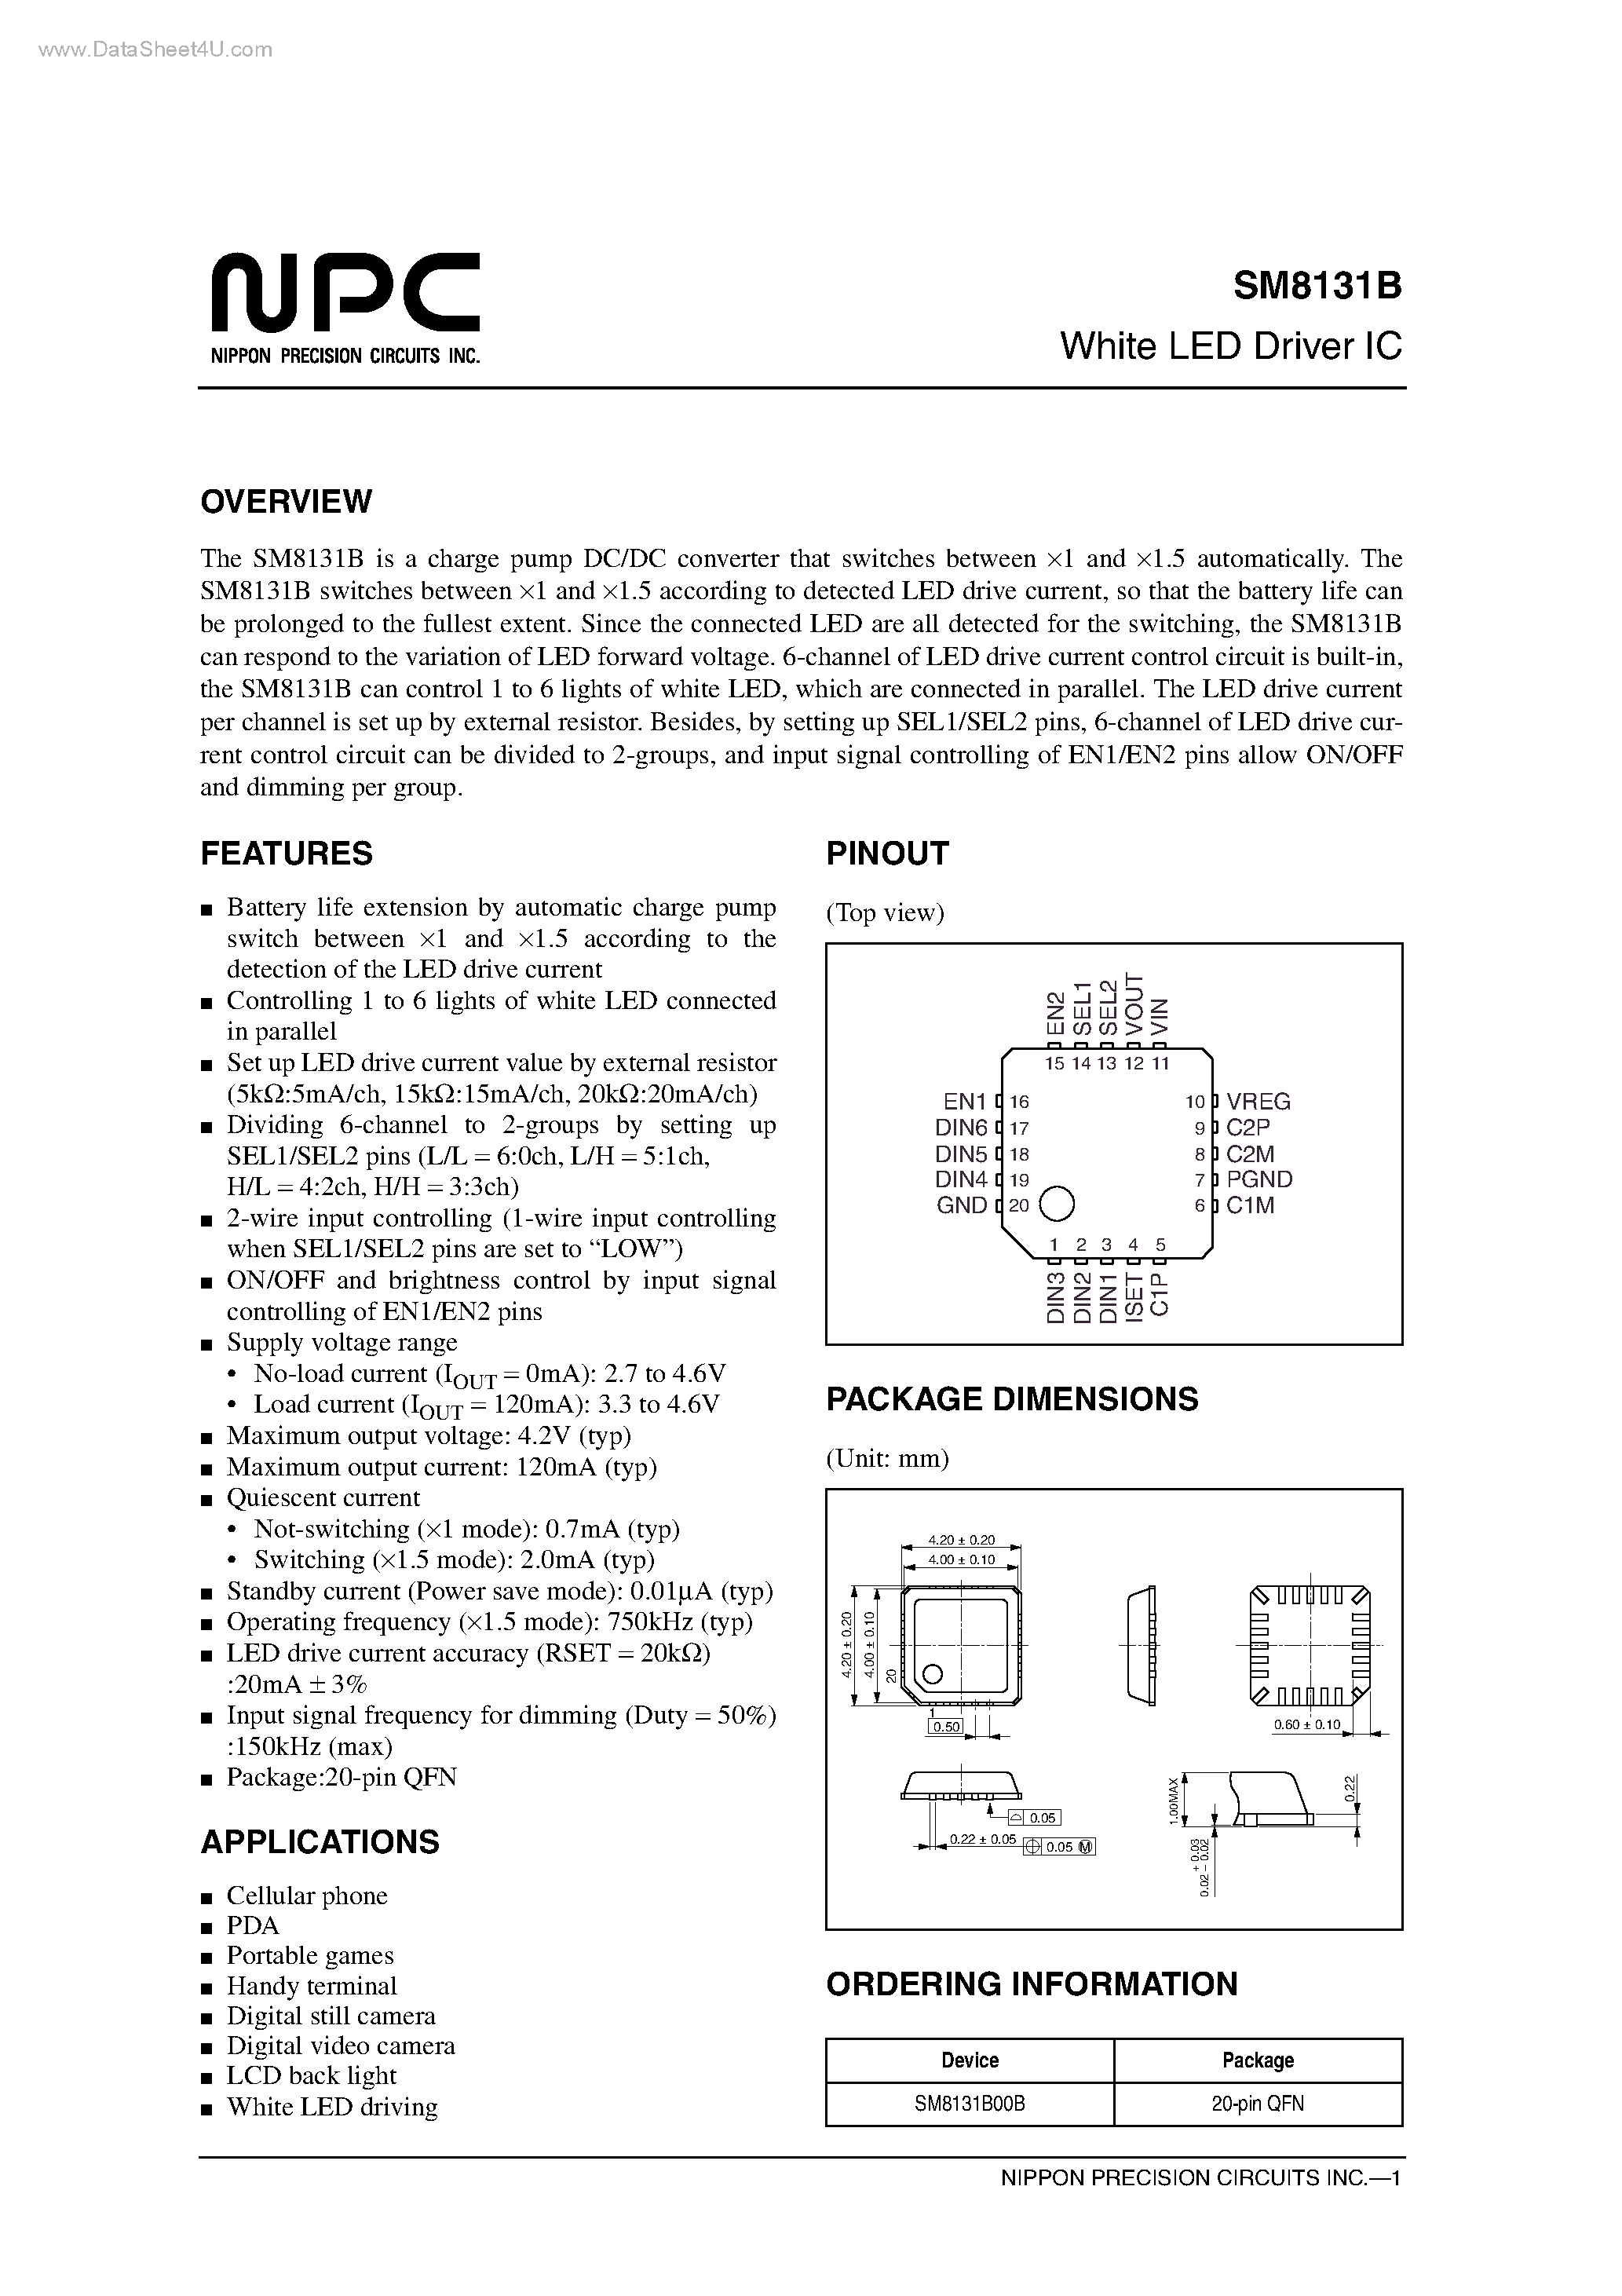 Datasheet SM8131B - White LED Driver IC page 1